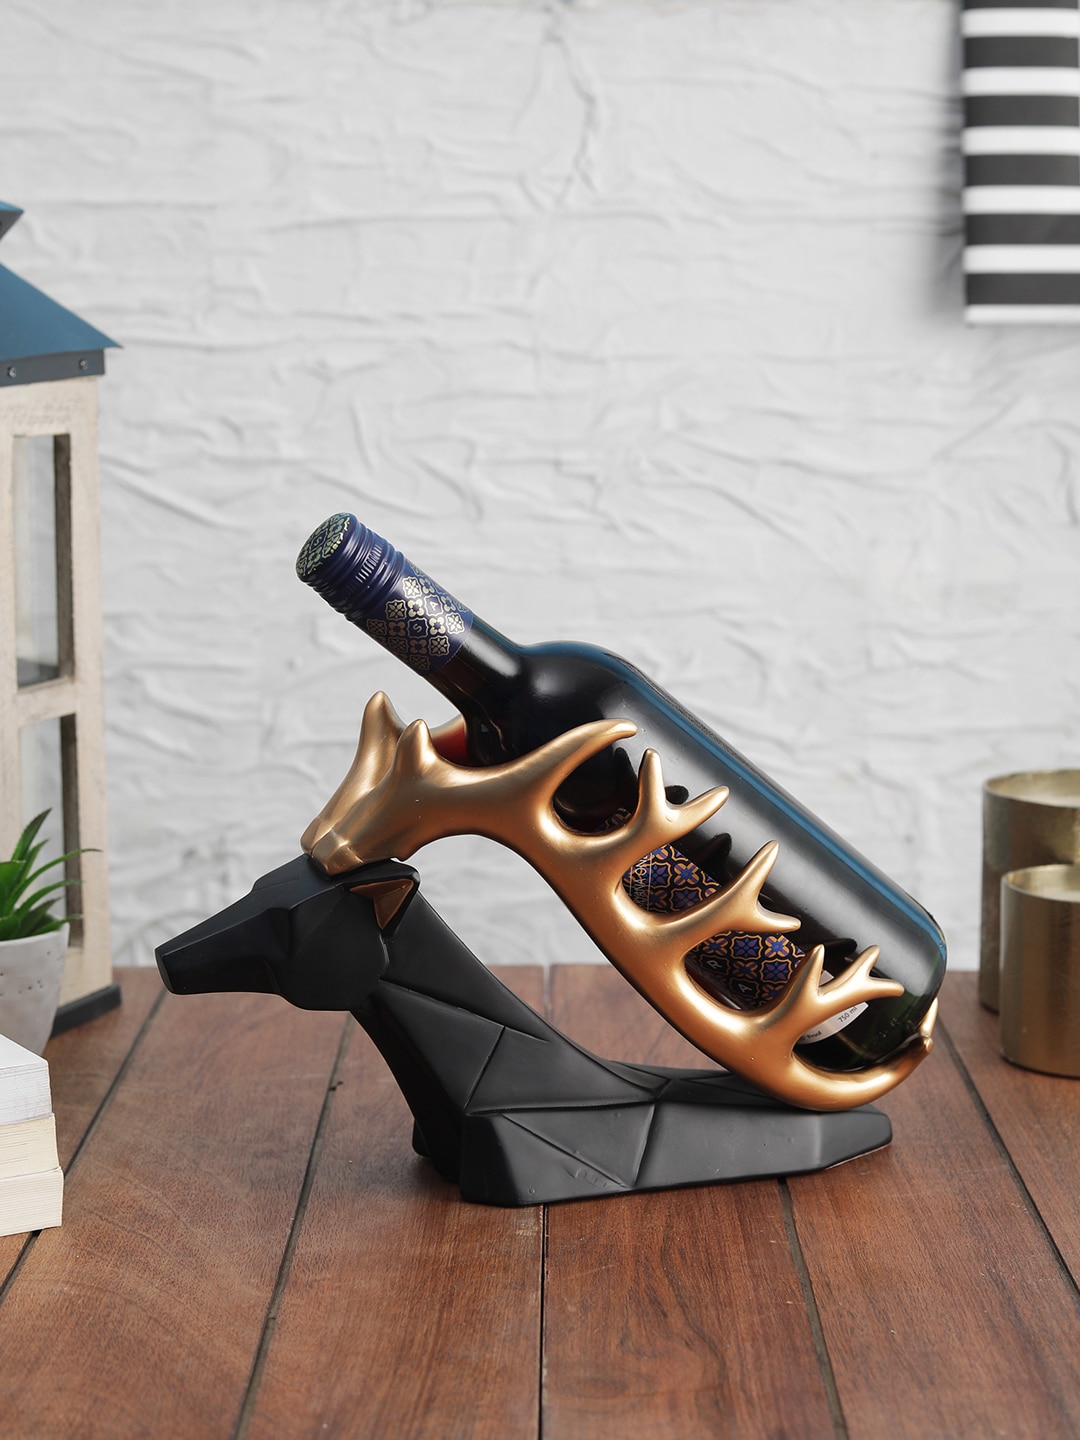 OddCroft Black Reindeer Wine Bottle Holder Showpiece Price in India